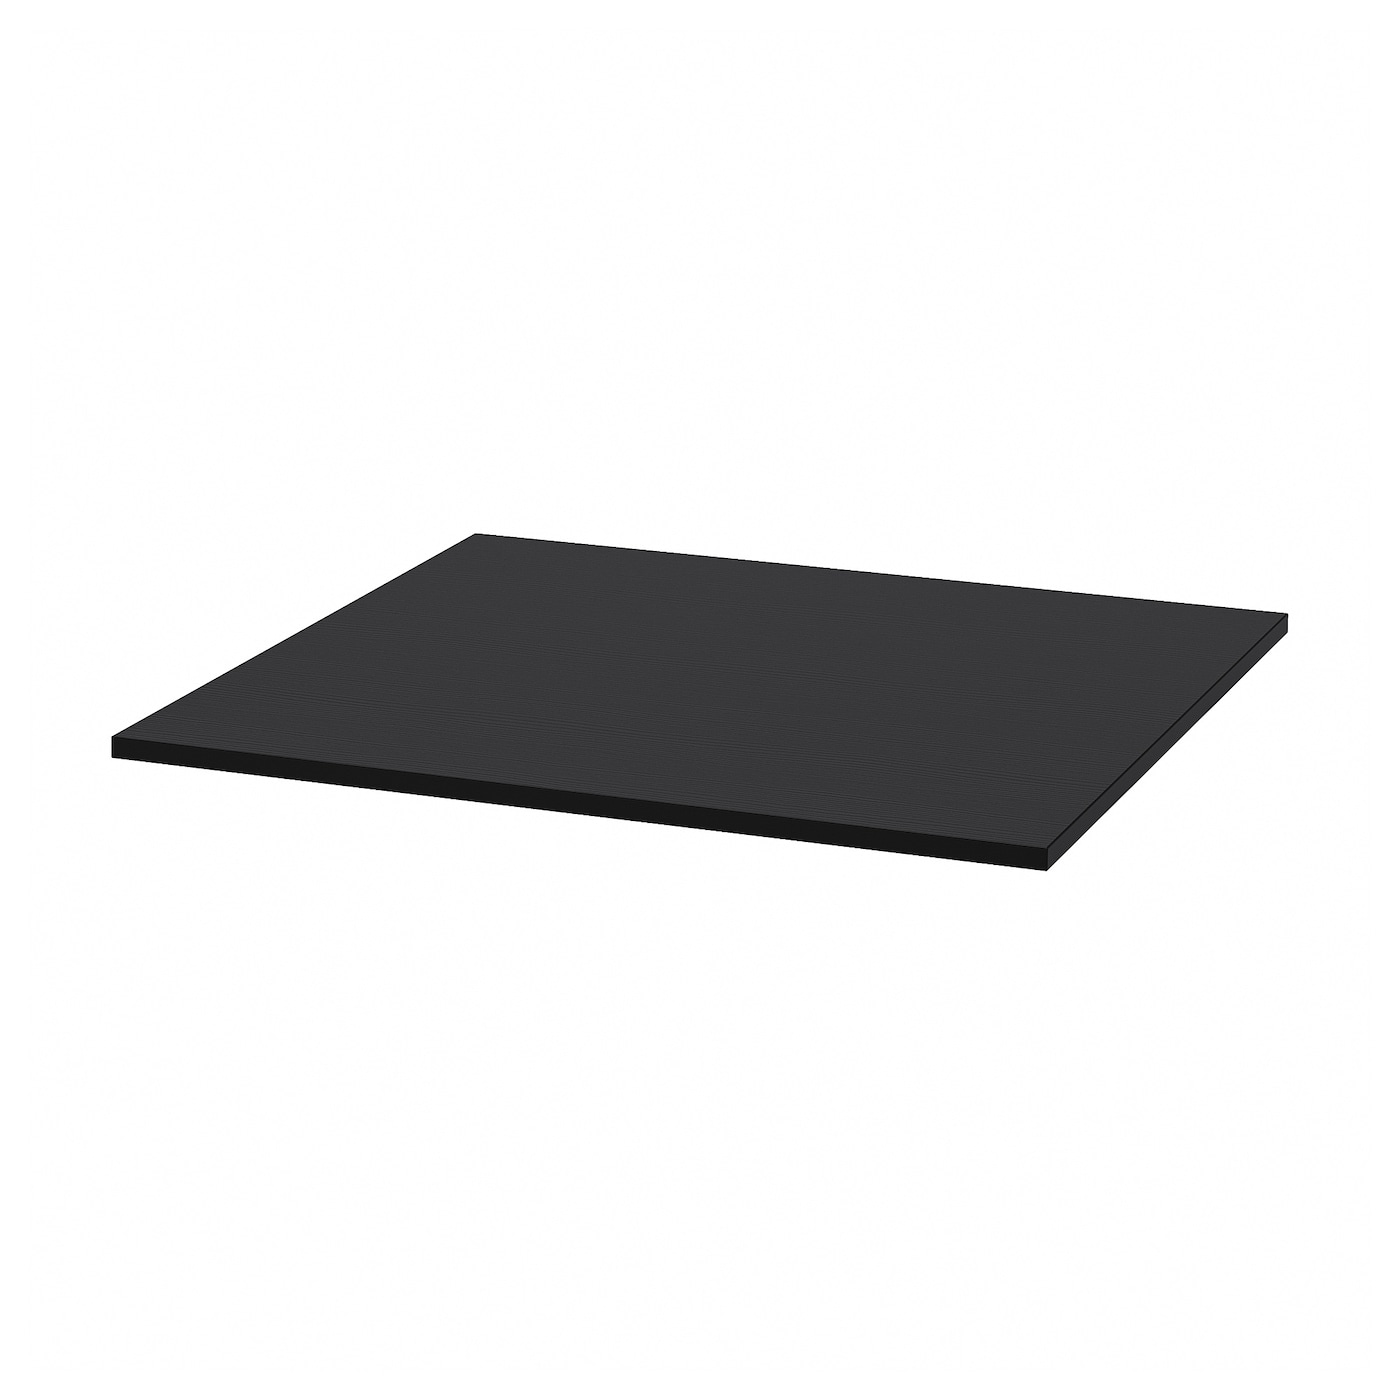 Sandsberg стол, черный, 67x67 СМСТОЛ, черный, 67x67 см